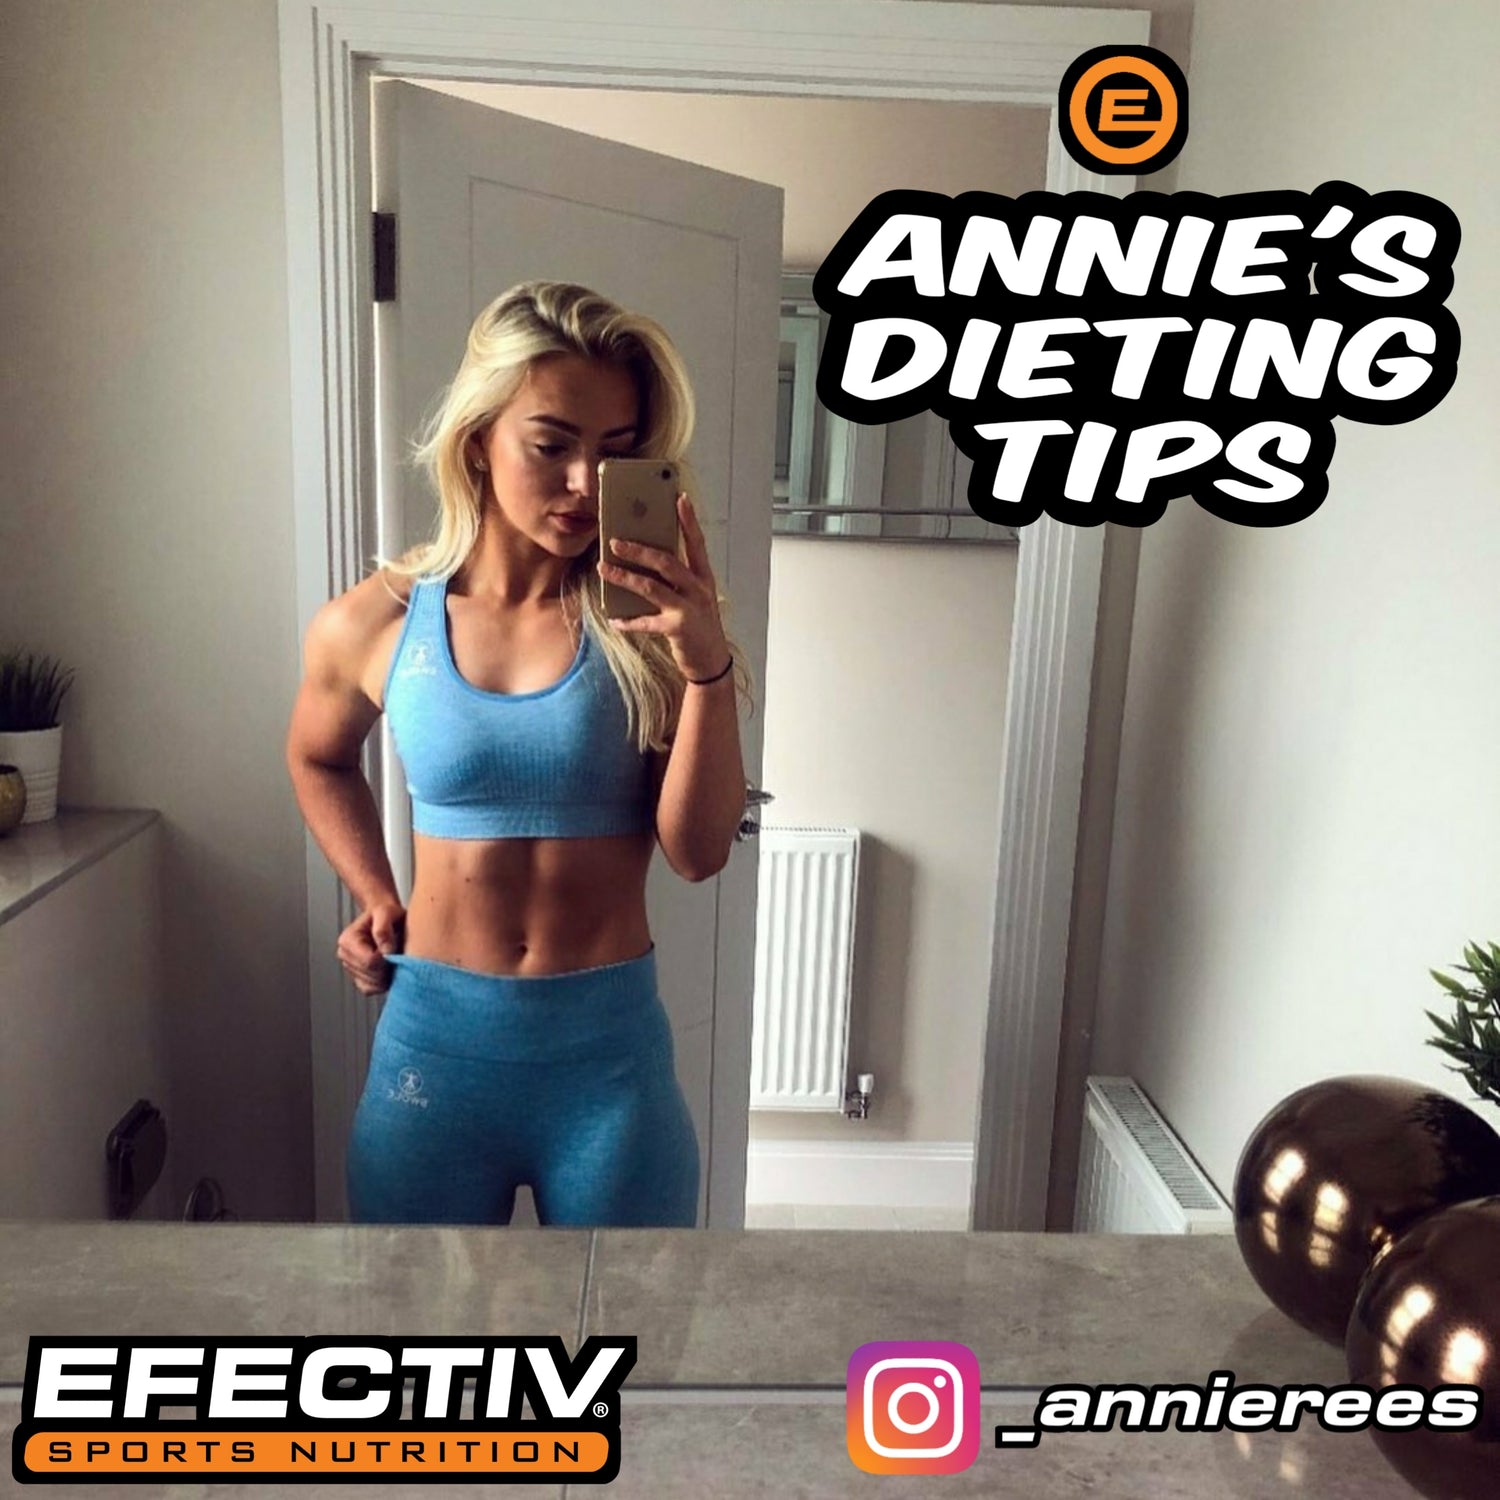 Annie's Dieting Tips #1